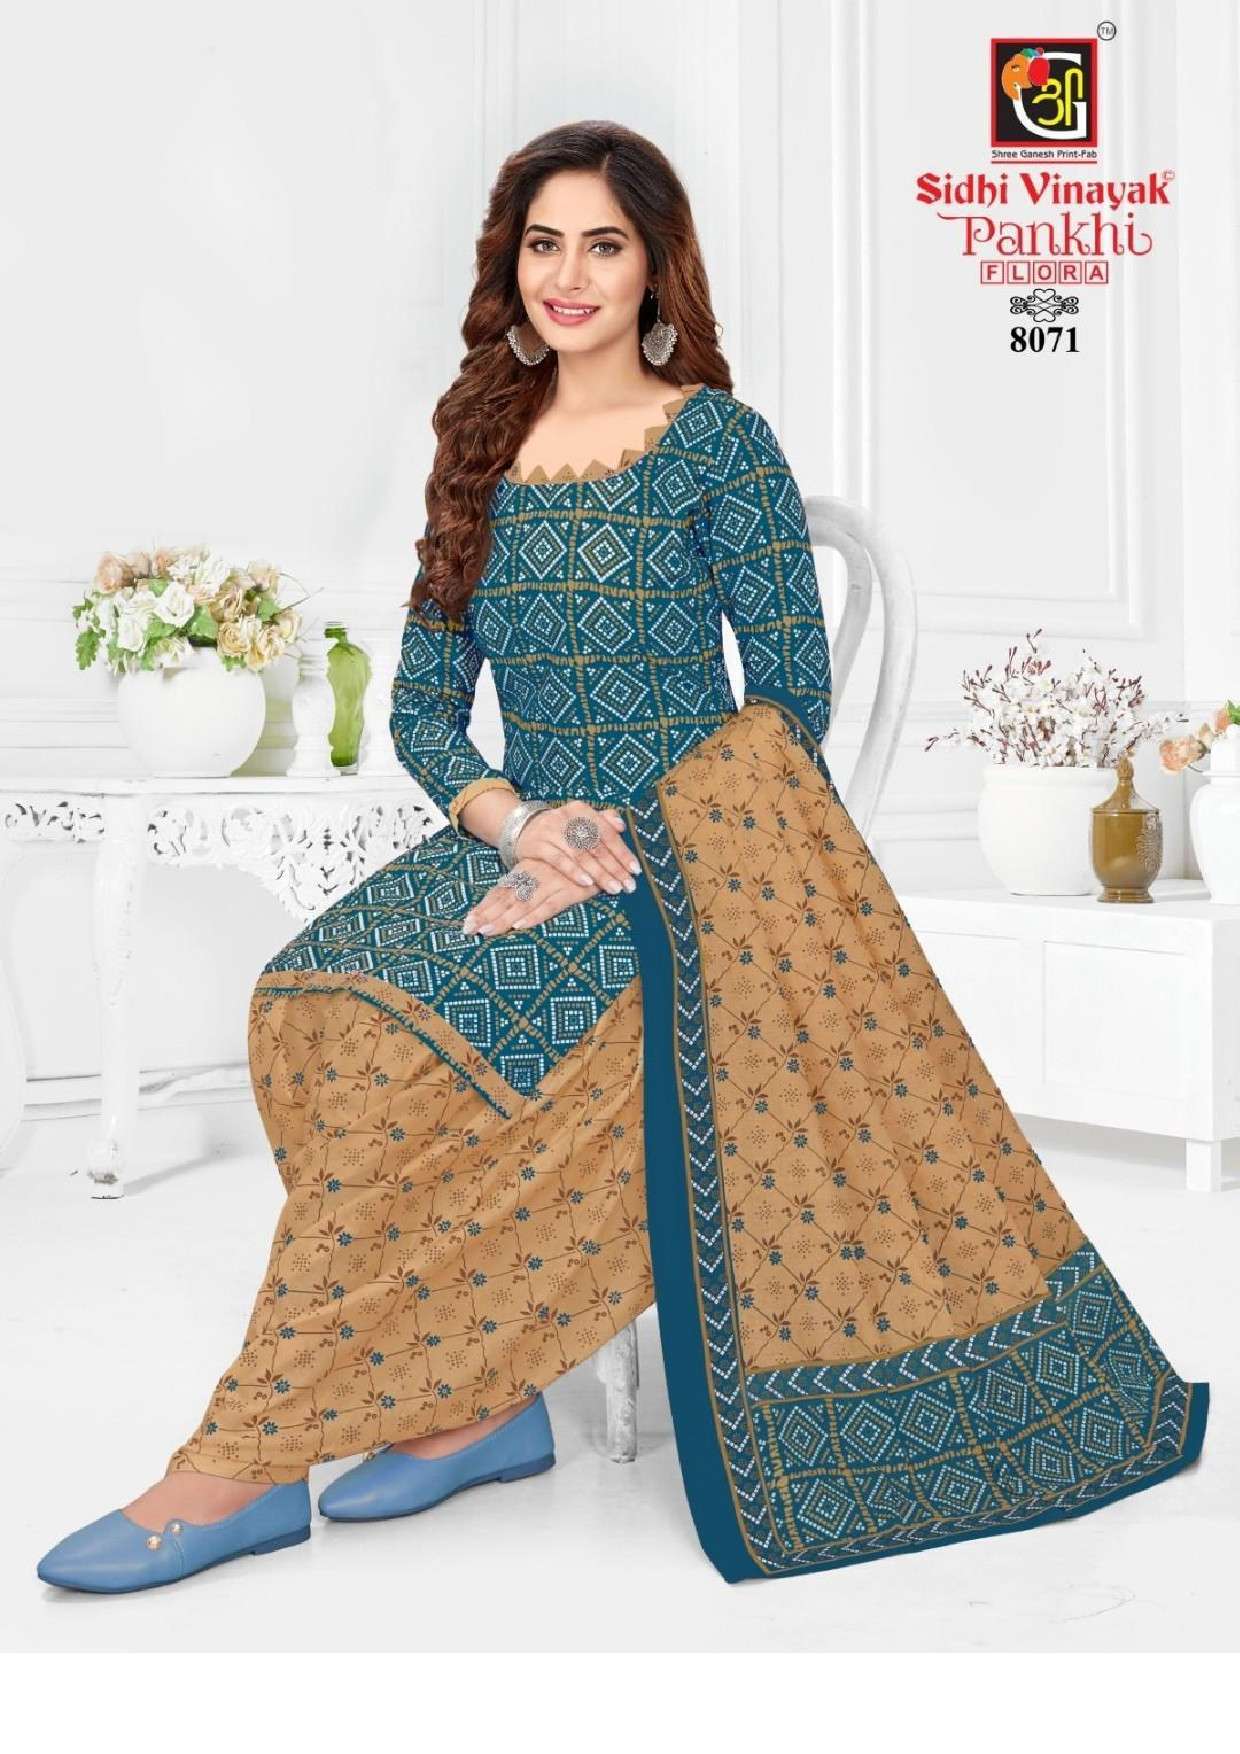 Sidhi Vinayak Pankhi Flora Vol-1 wholesale dress material manufacturer in surat